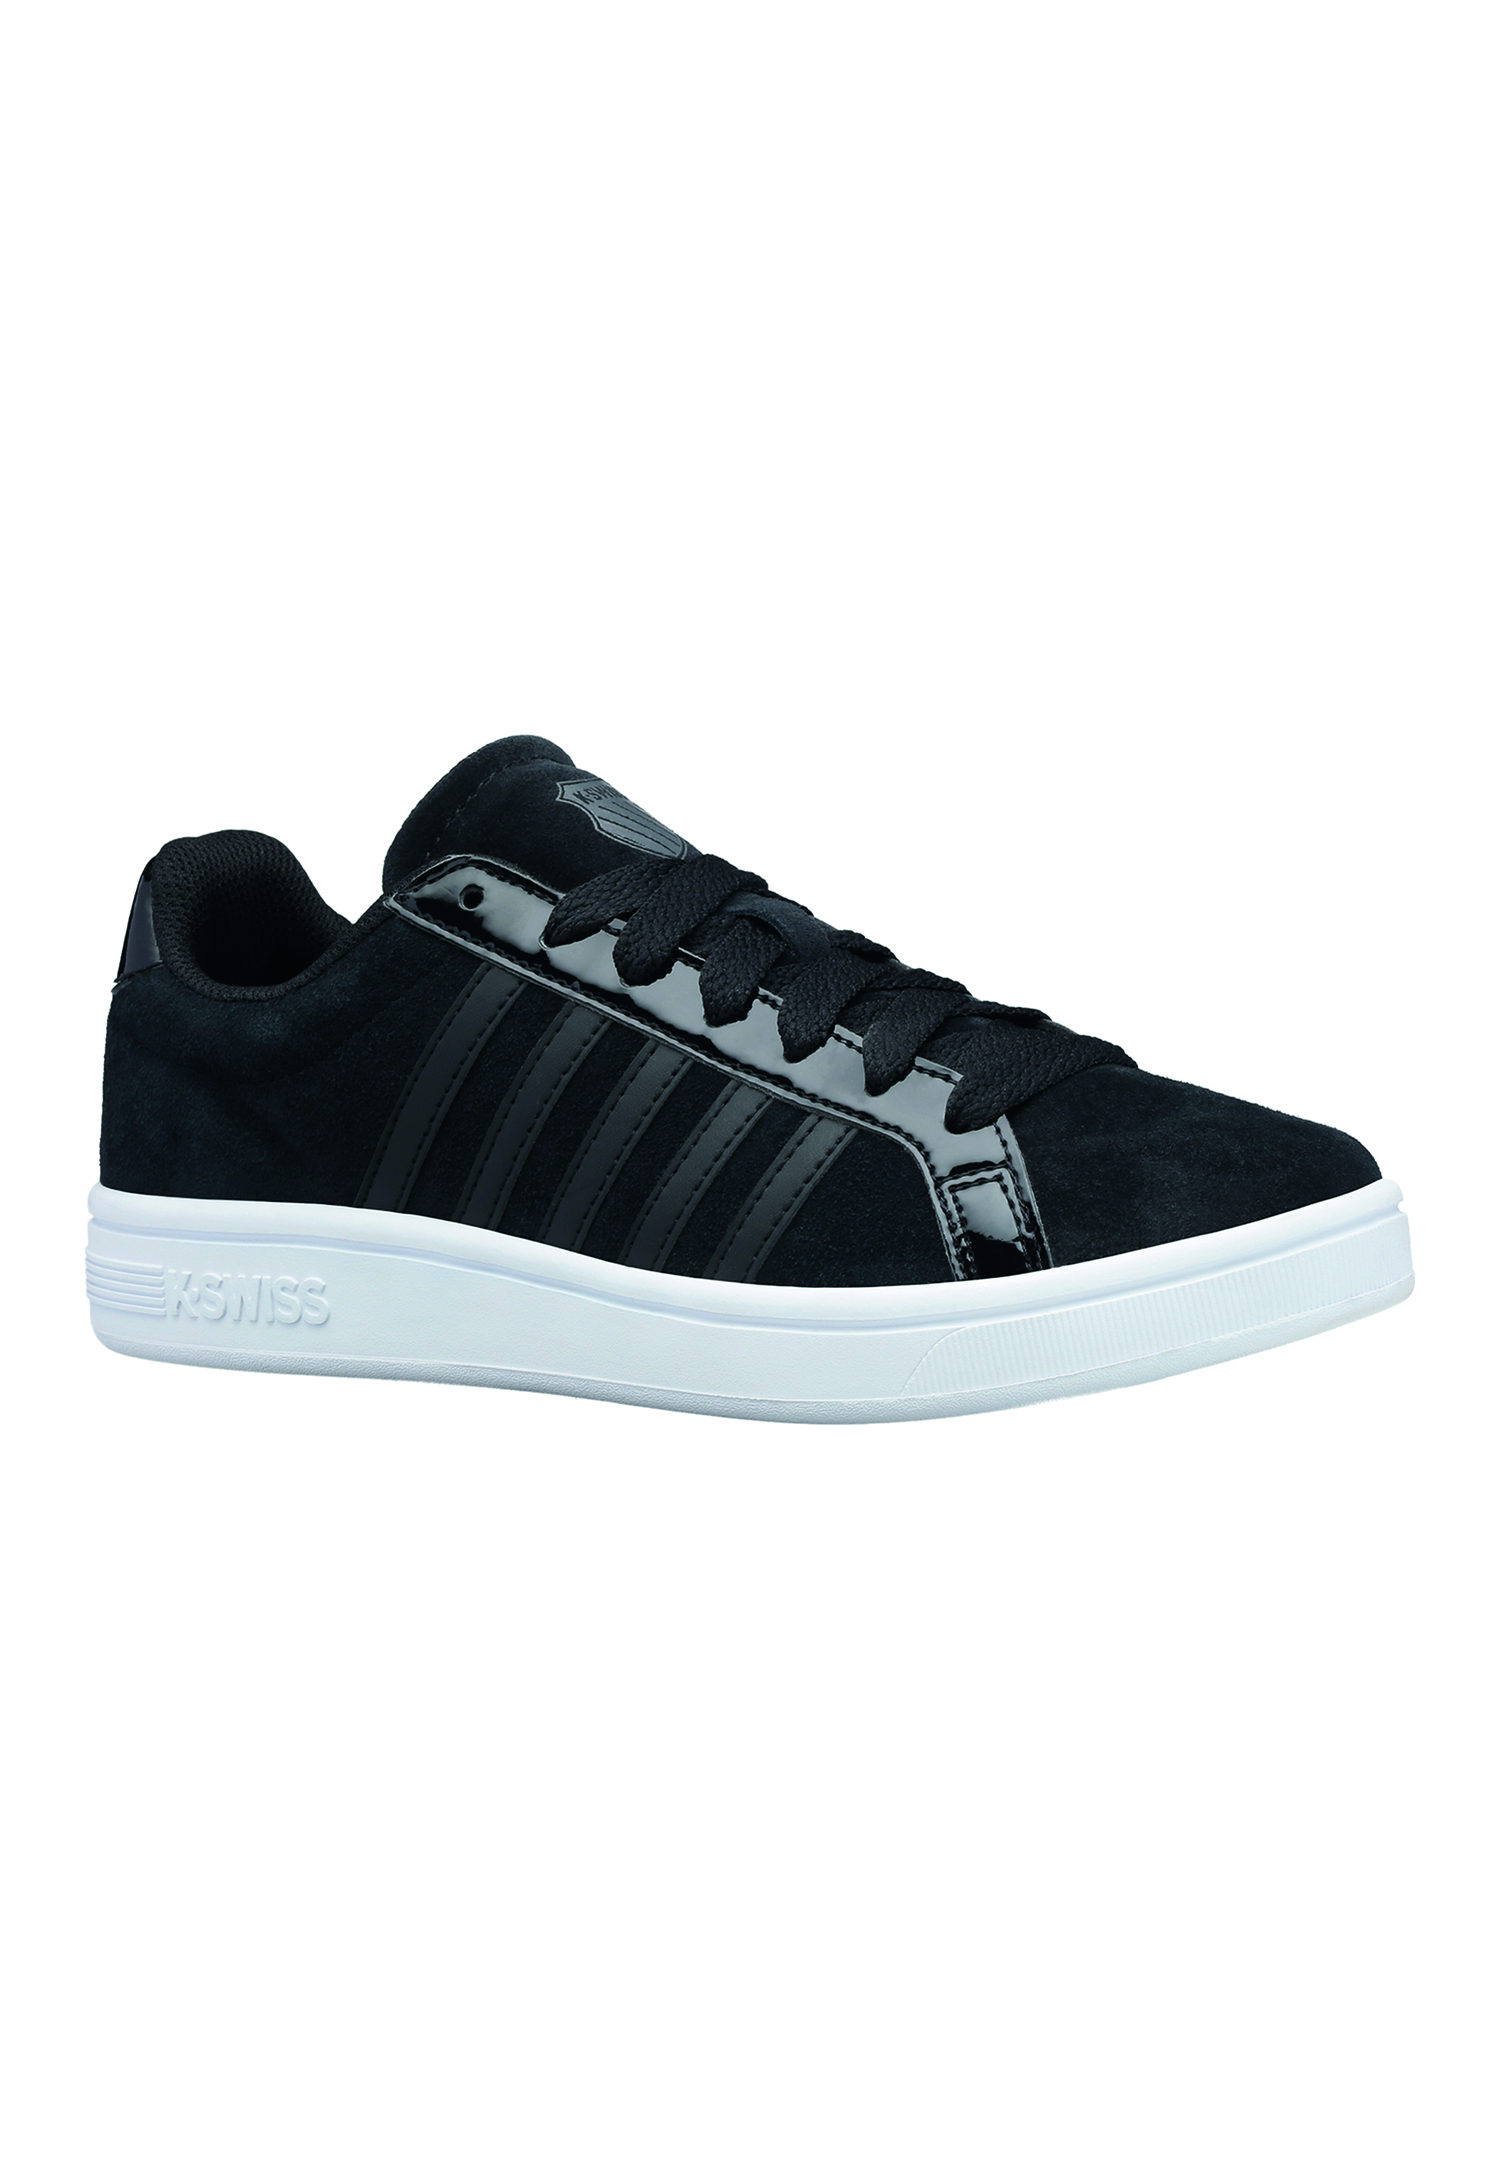 K-Swiss Damen Court TIEBREAK SDE Sneaker, Black/Black/White, 38 EU